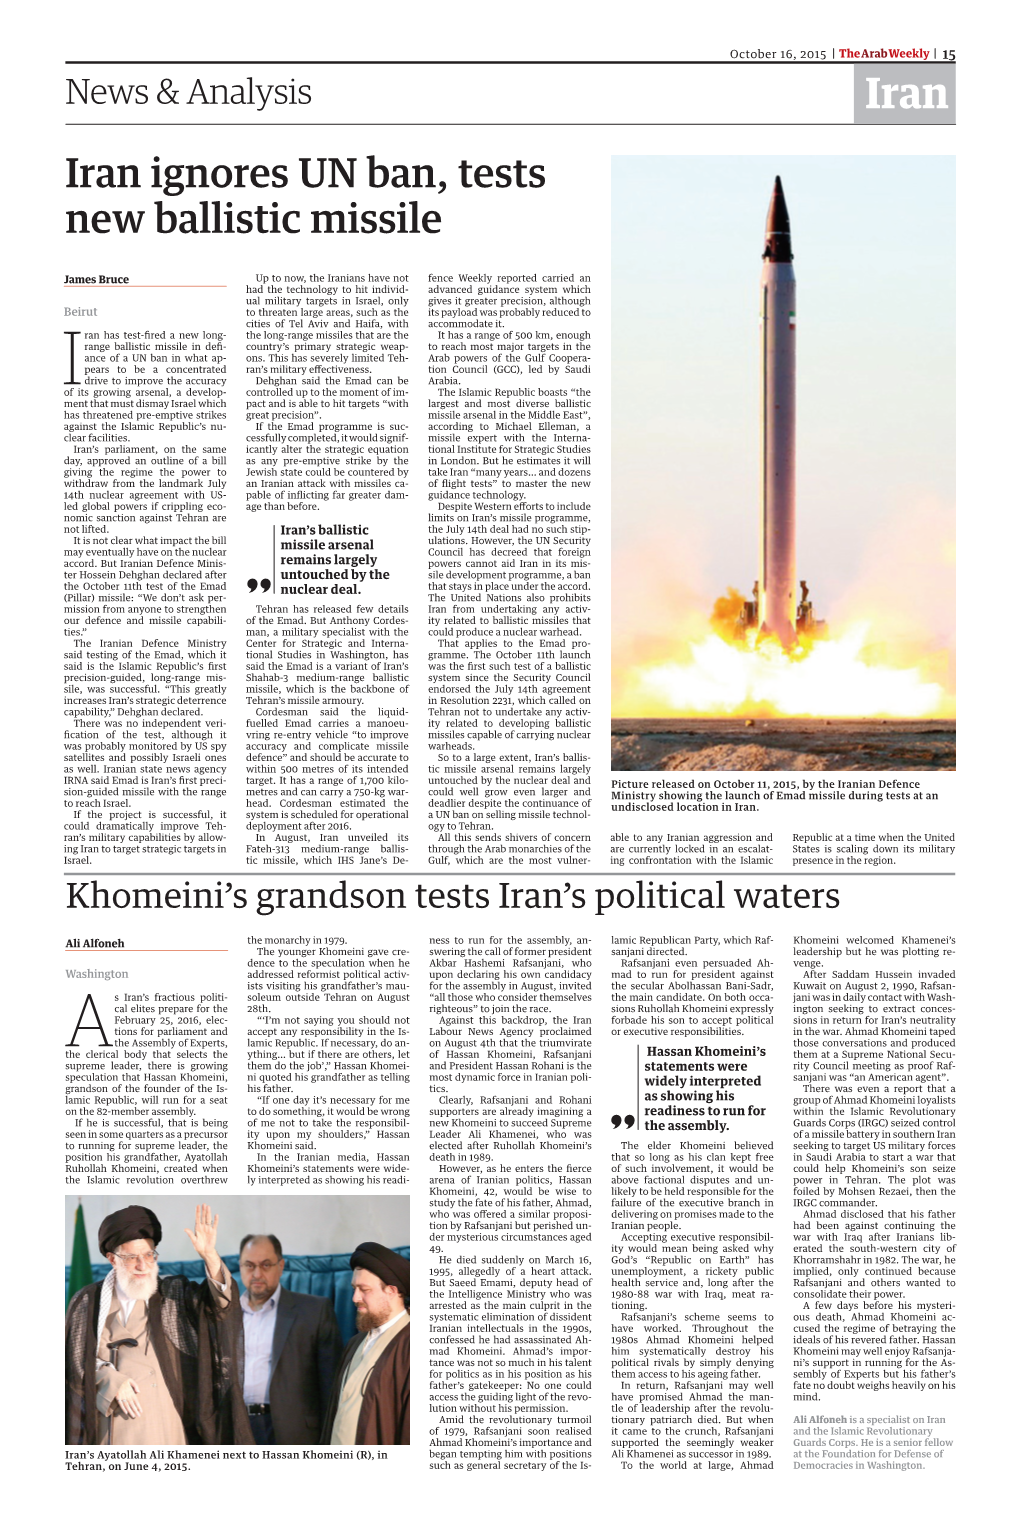 Iran Ignores UN Ban, Tests New Ballistic Missile